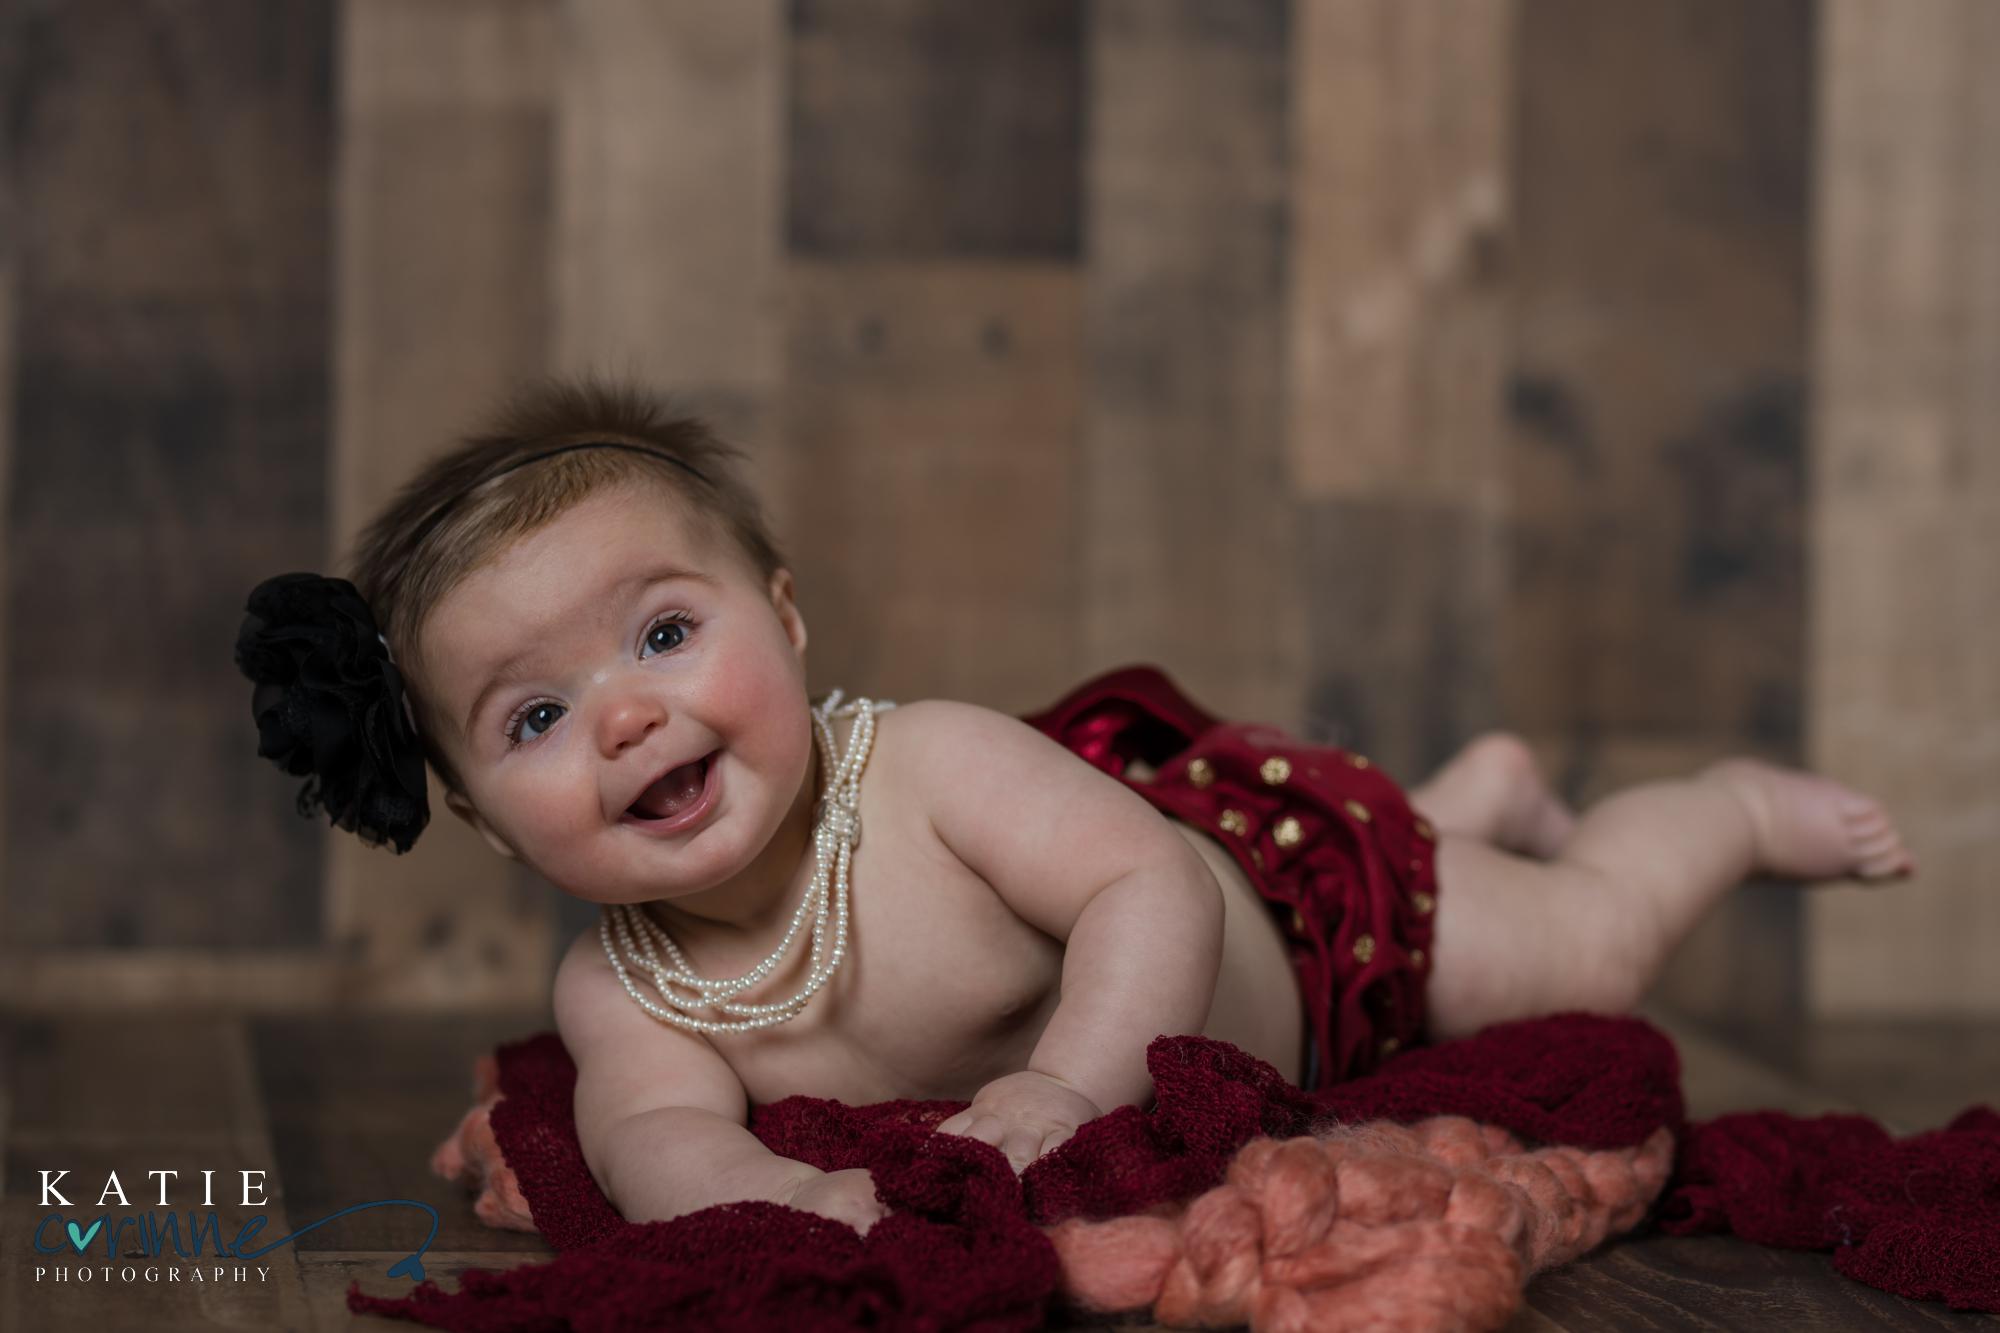 Colorado baby wears pearls ans smiles